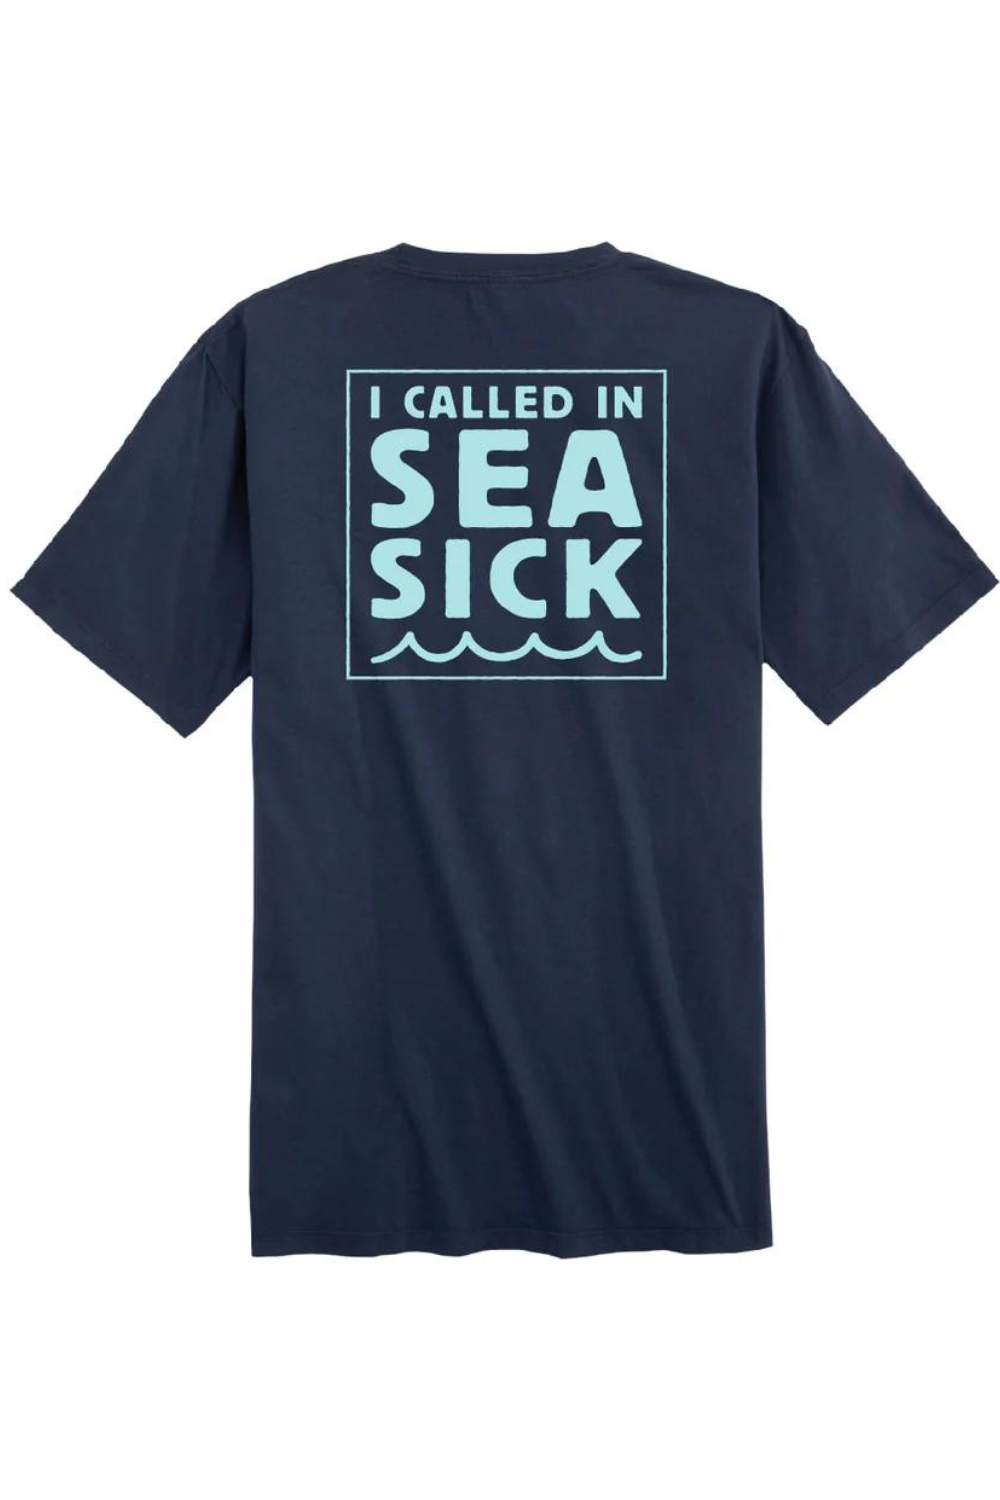 Coast Hippie Classic Sea Sick T-Shirt - Navy